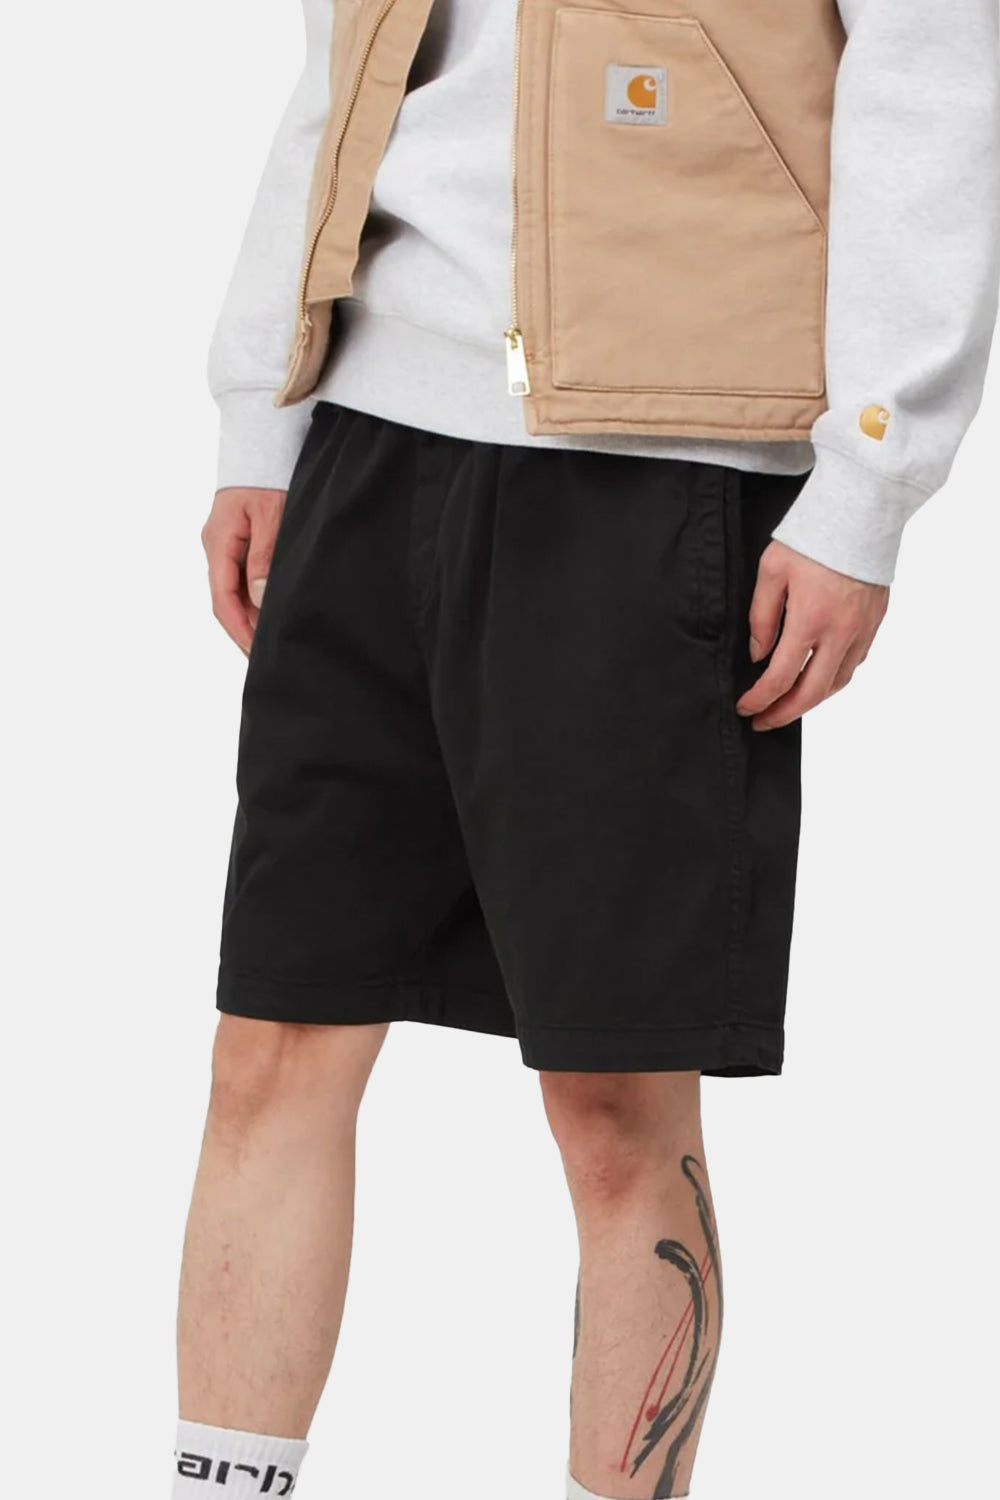 Carhartt WIP Lawton Shorts (Black)